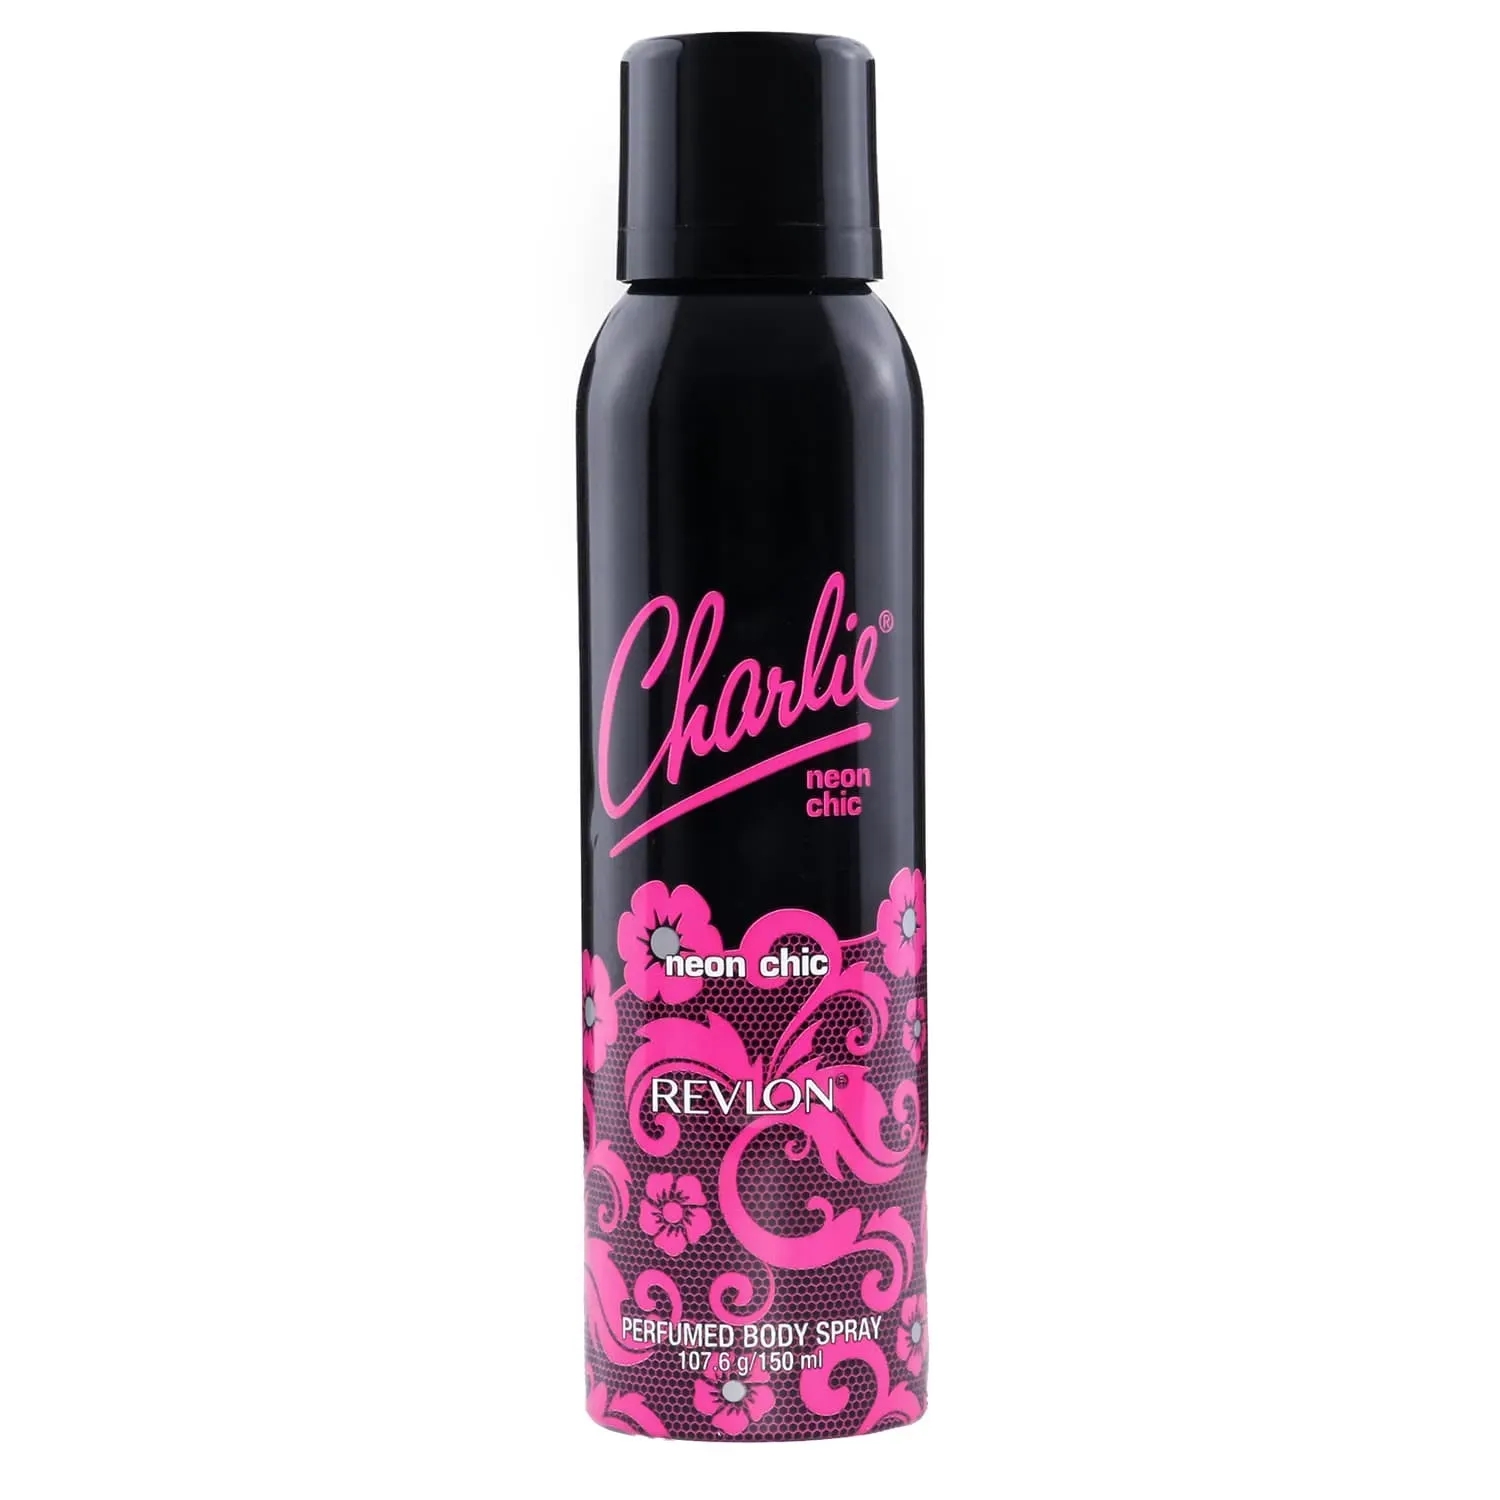 Revlon | Revlon Charlie Neon Chic Perfumed Body Spray (150ml)